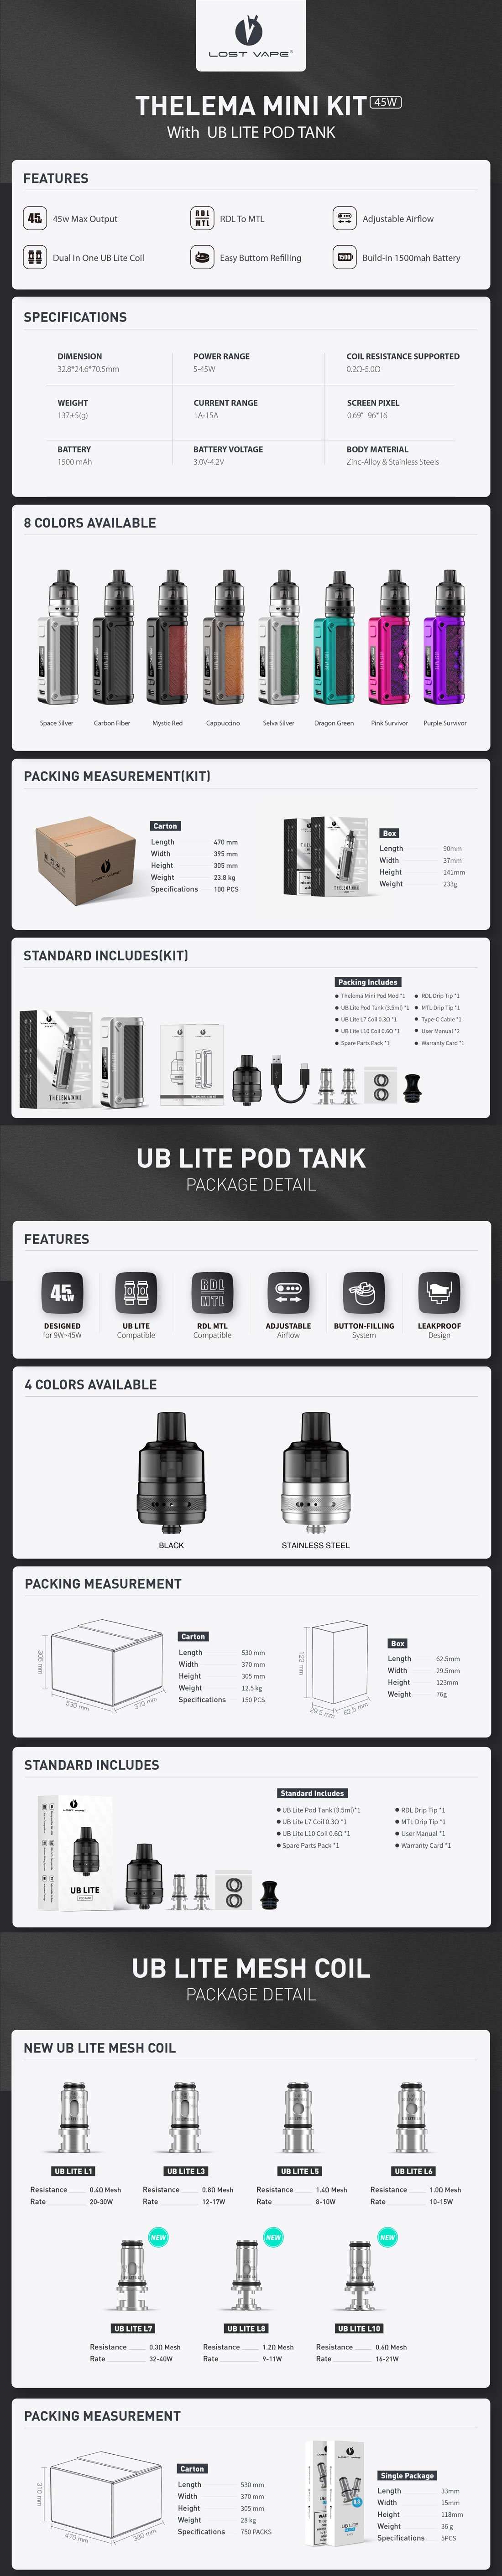 Thelema Mini + UB Lite Pod Tank Pack